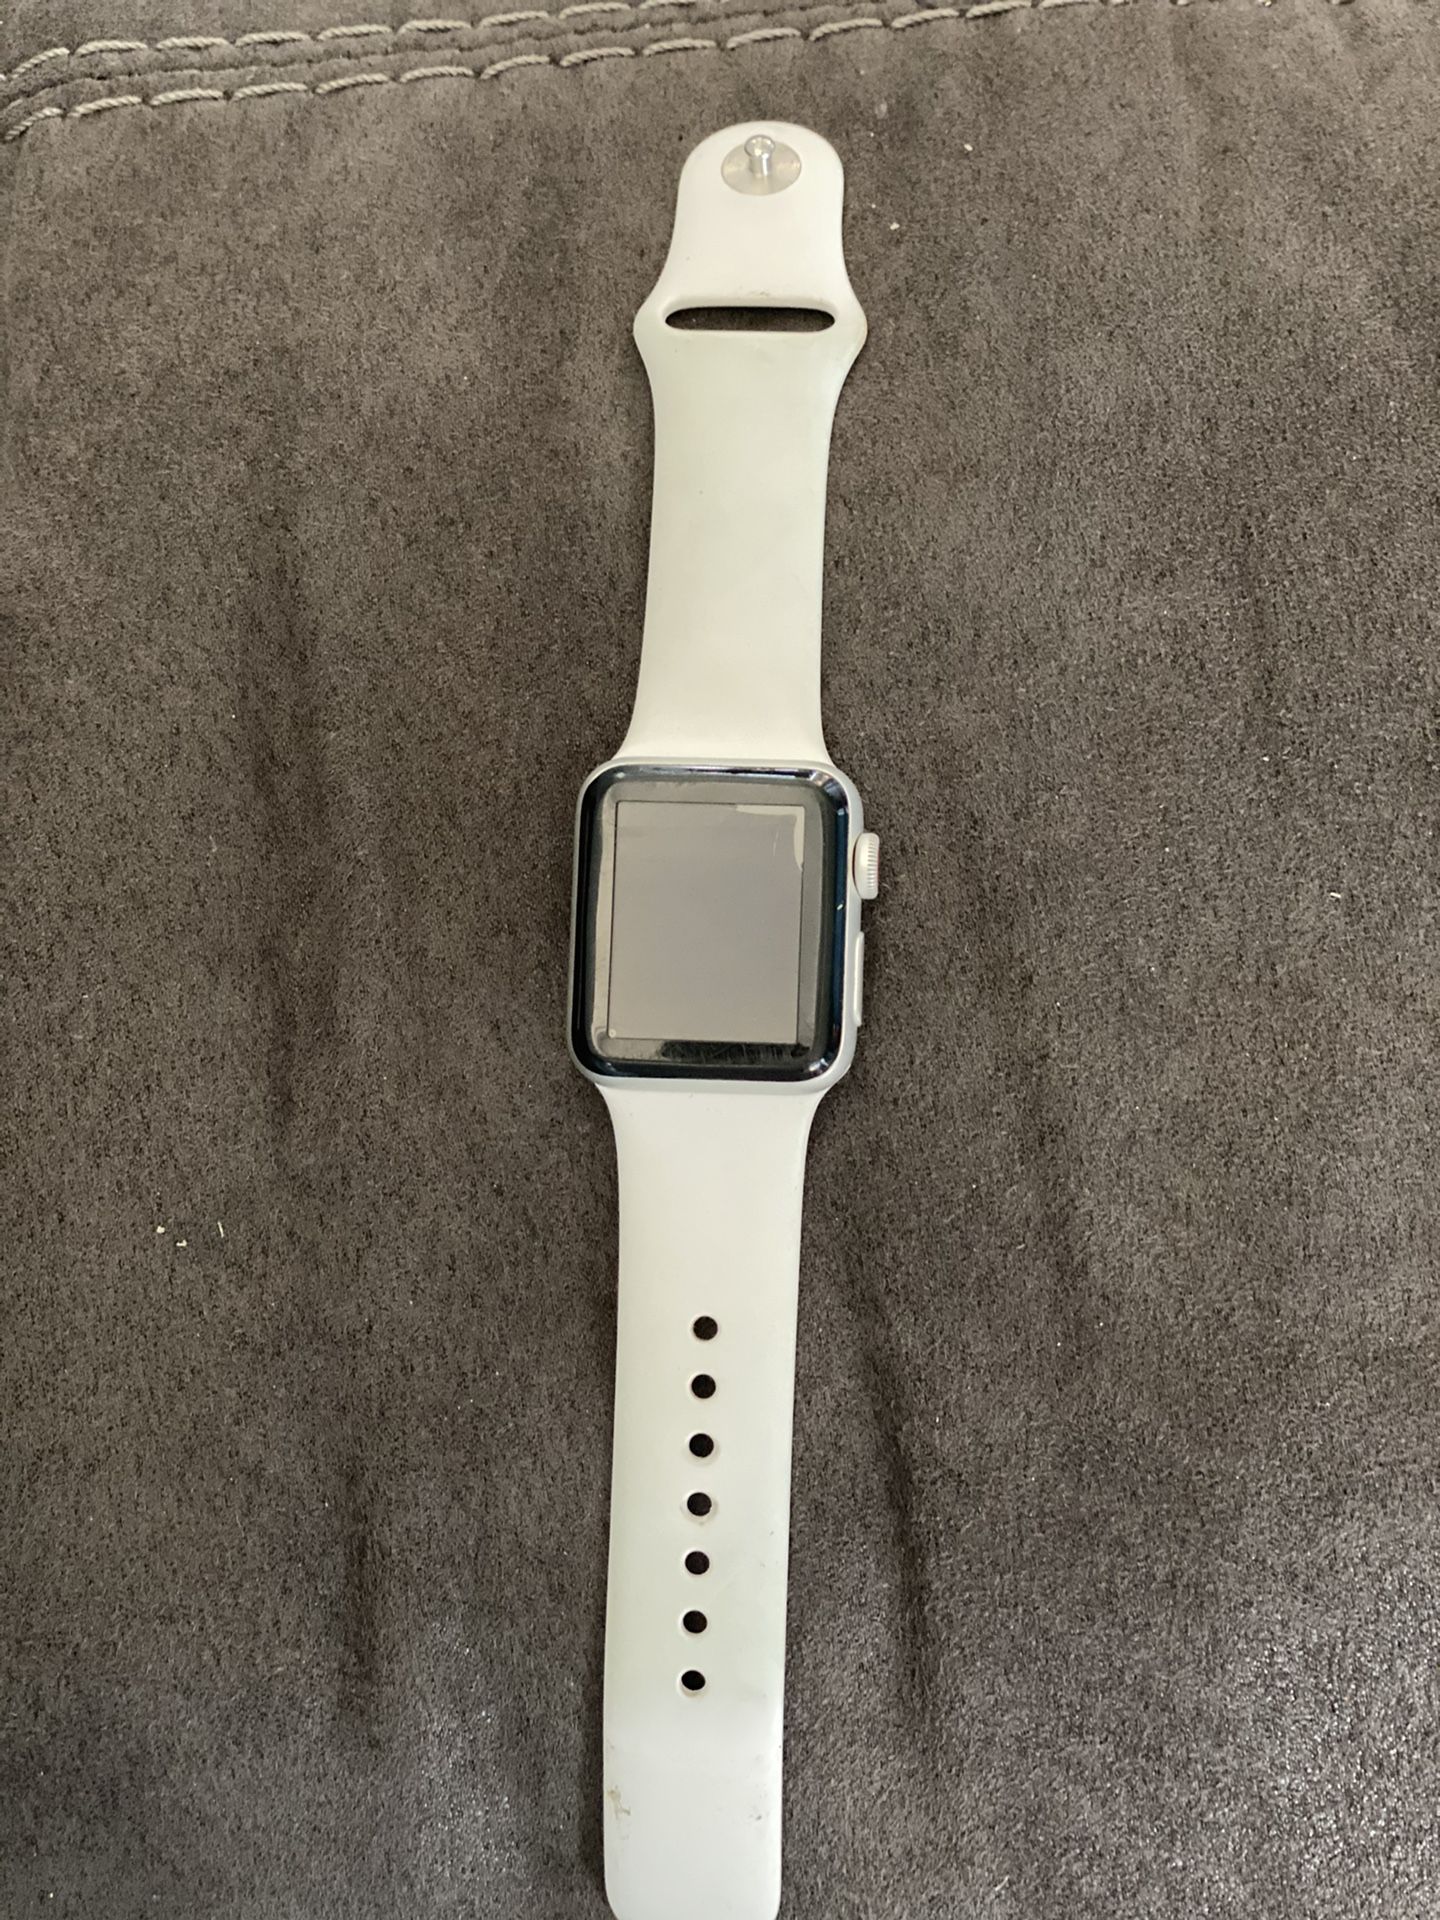 Apple Watch Series 3 gps+cellular